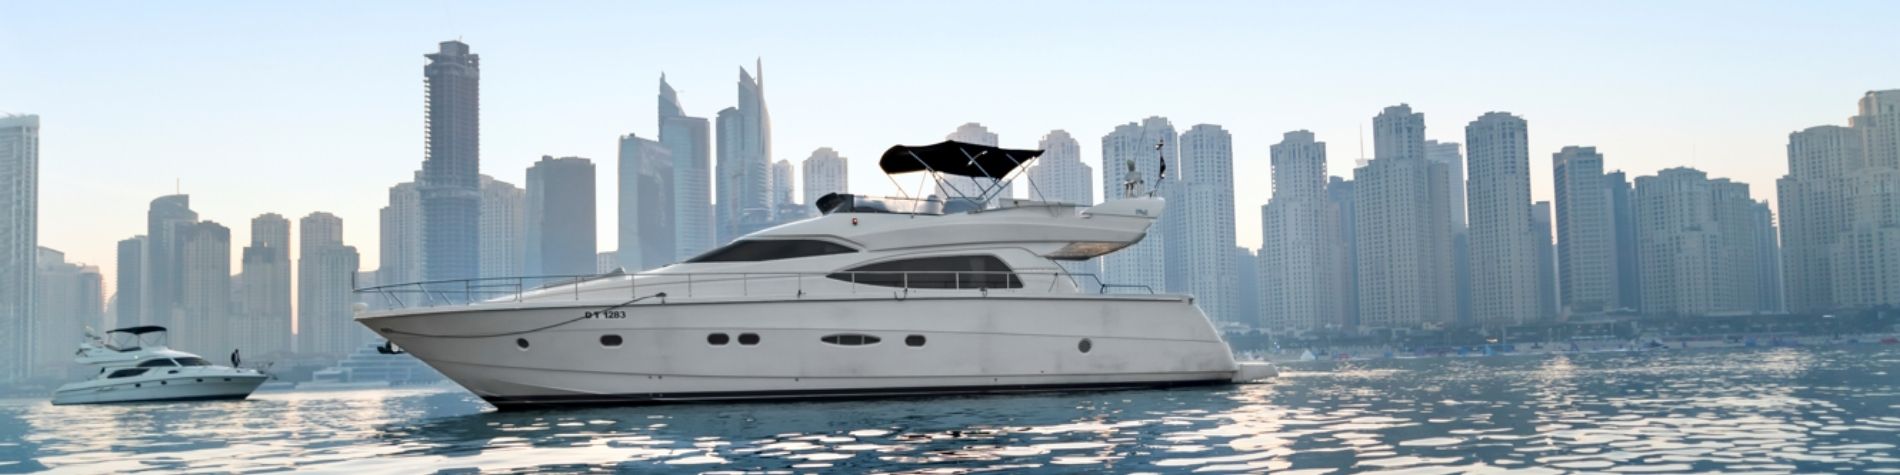 Rent Integrity 55 FT Yacht in Dubai